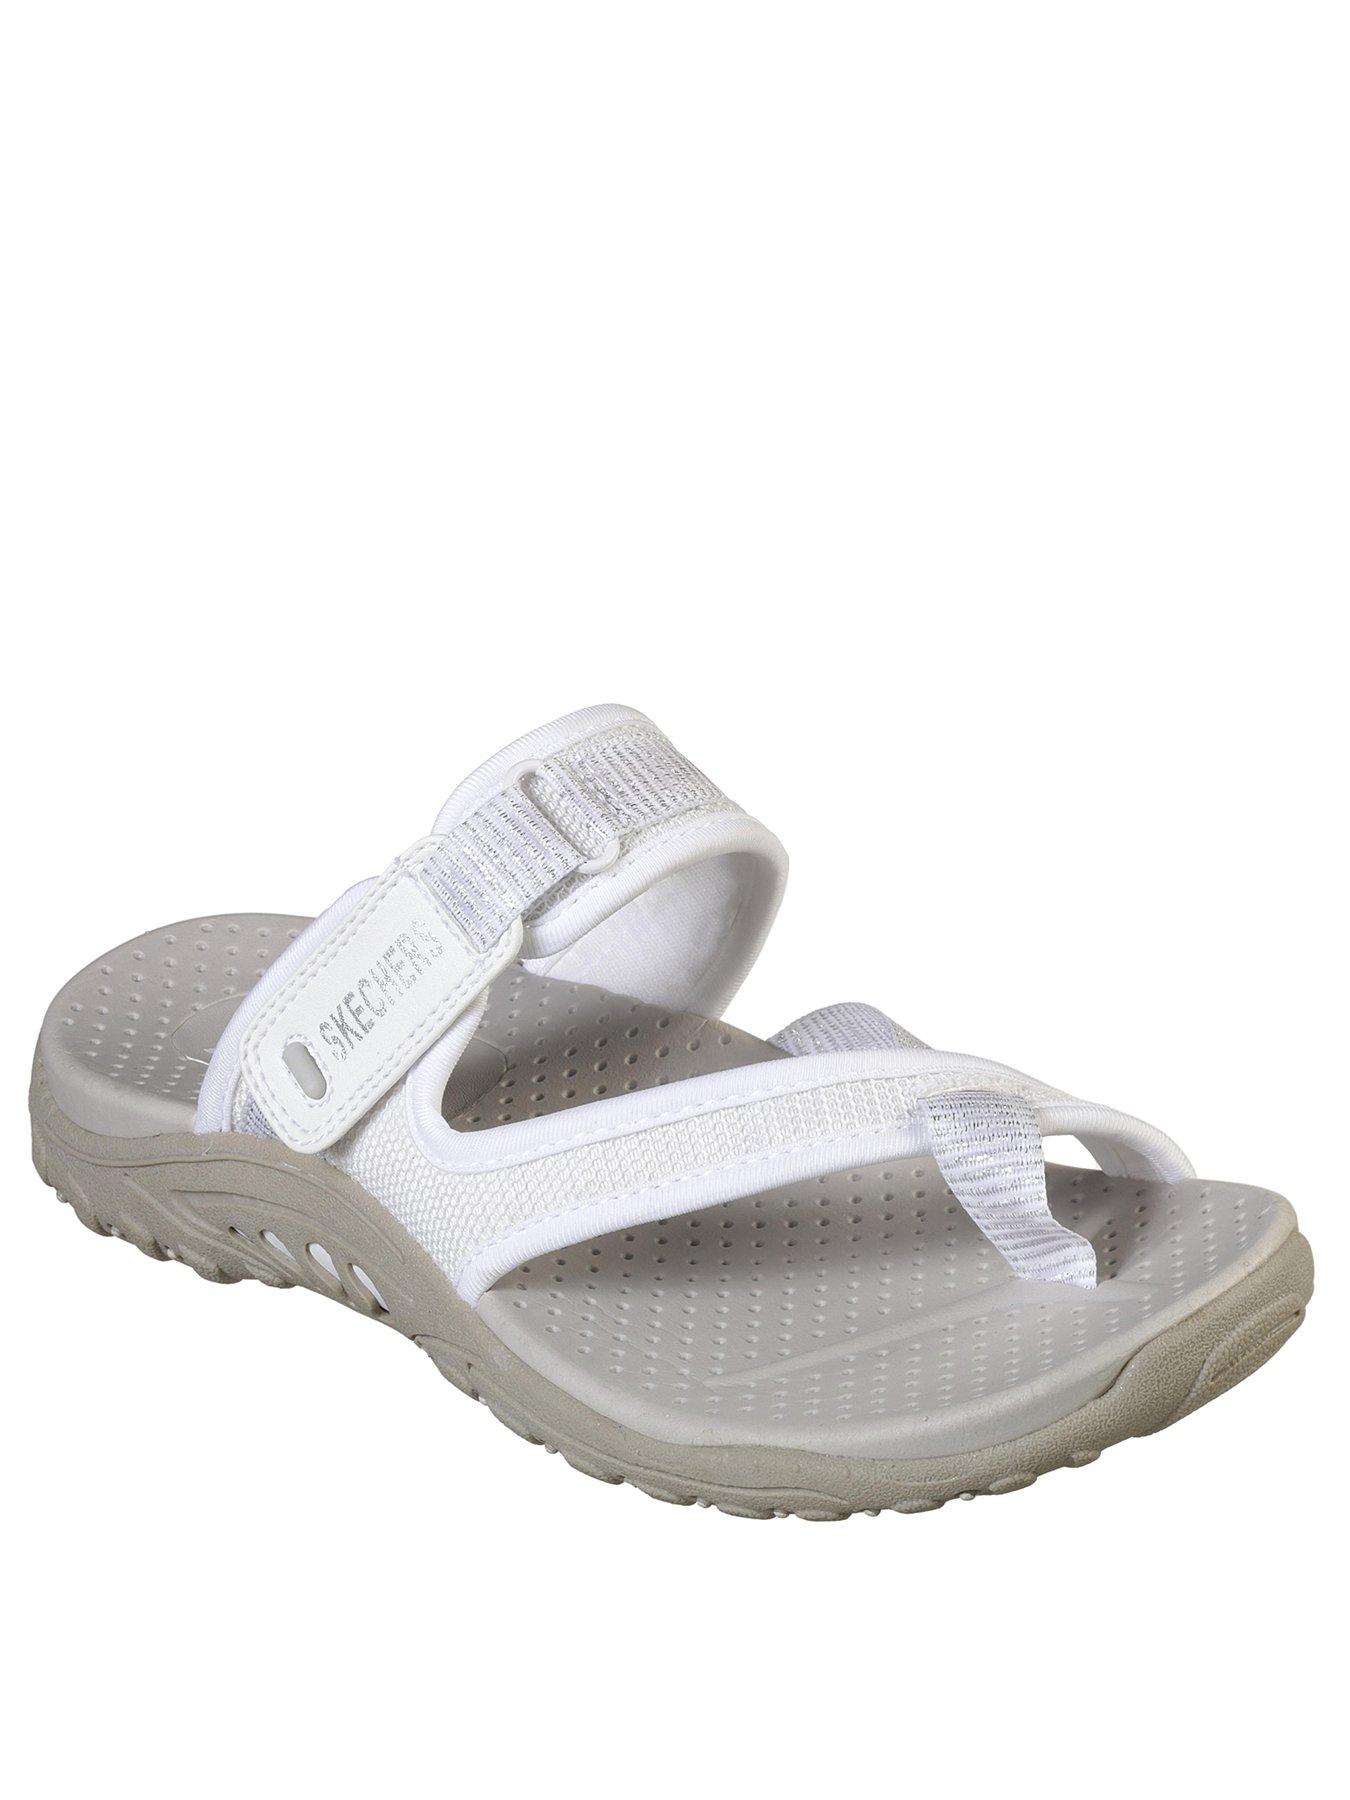 skechers luxe foam sandals uk